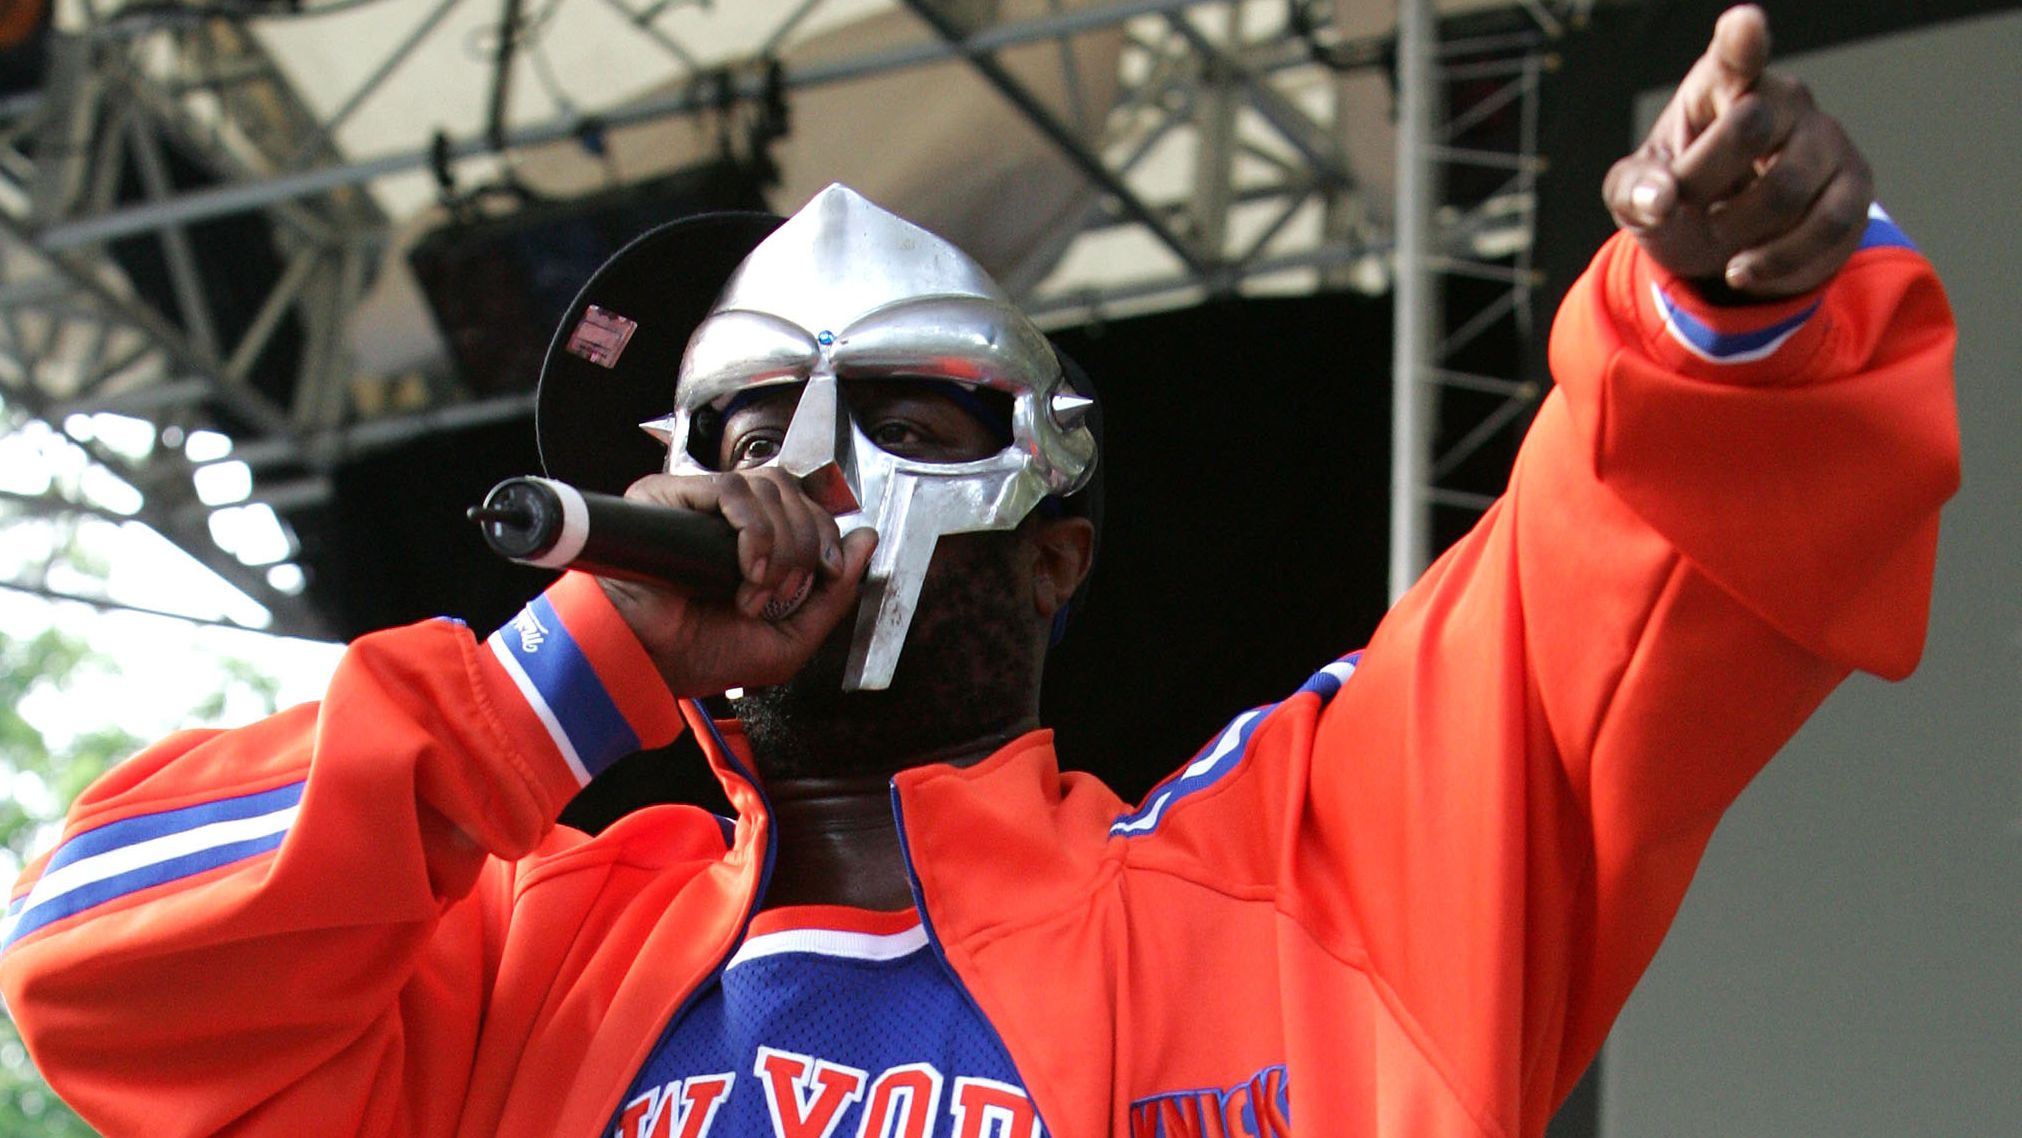 MF Doom, influential rapper, died in October at 49